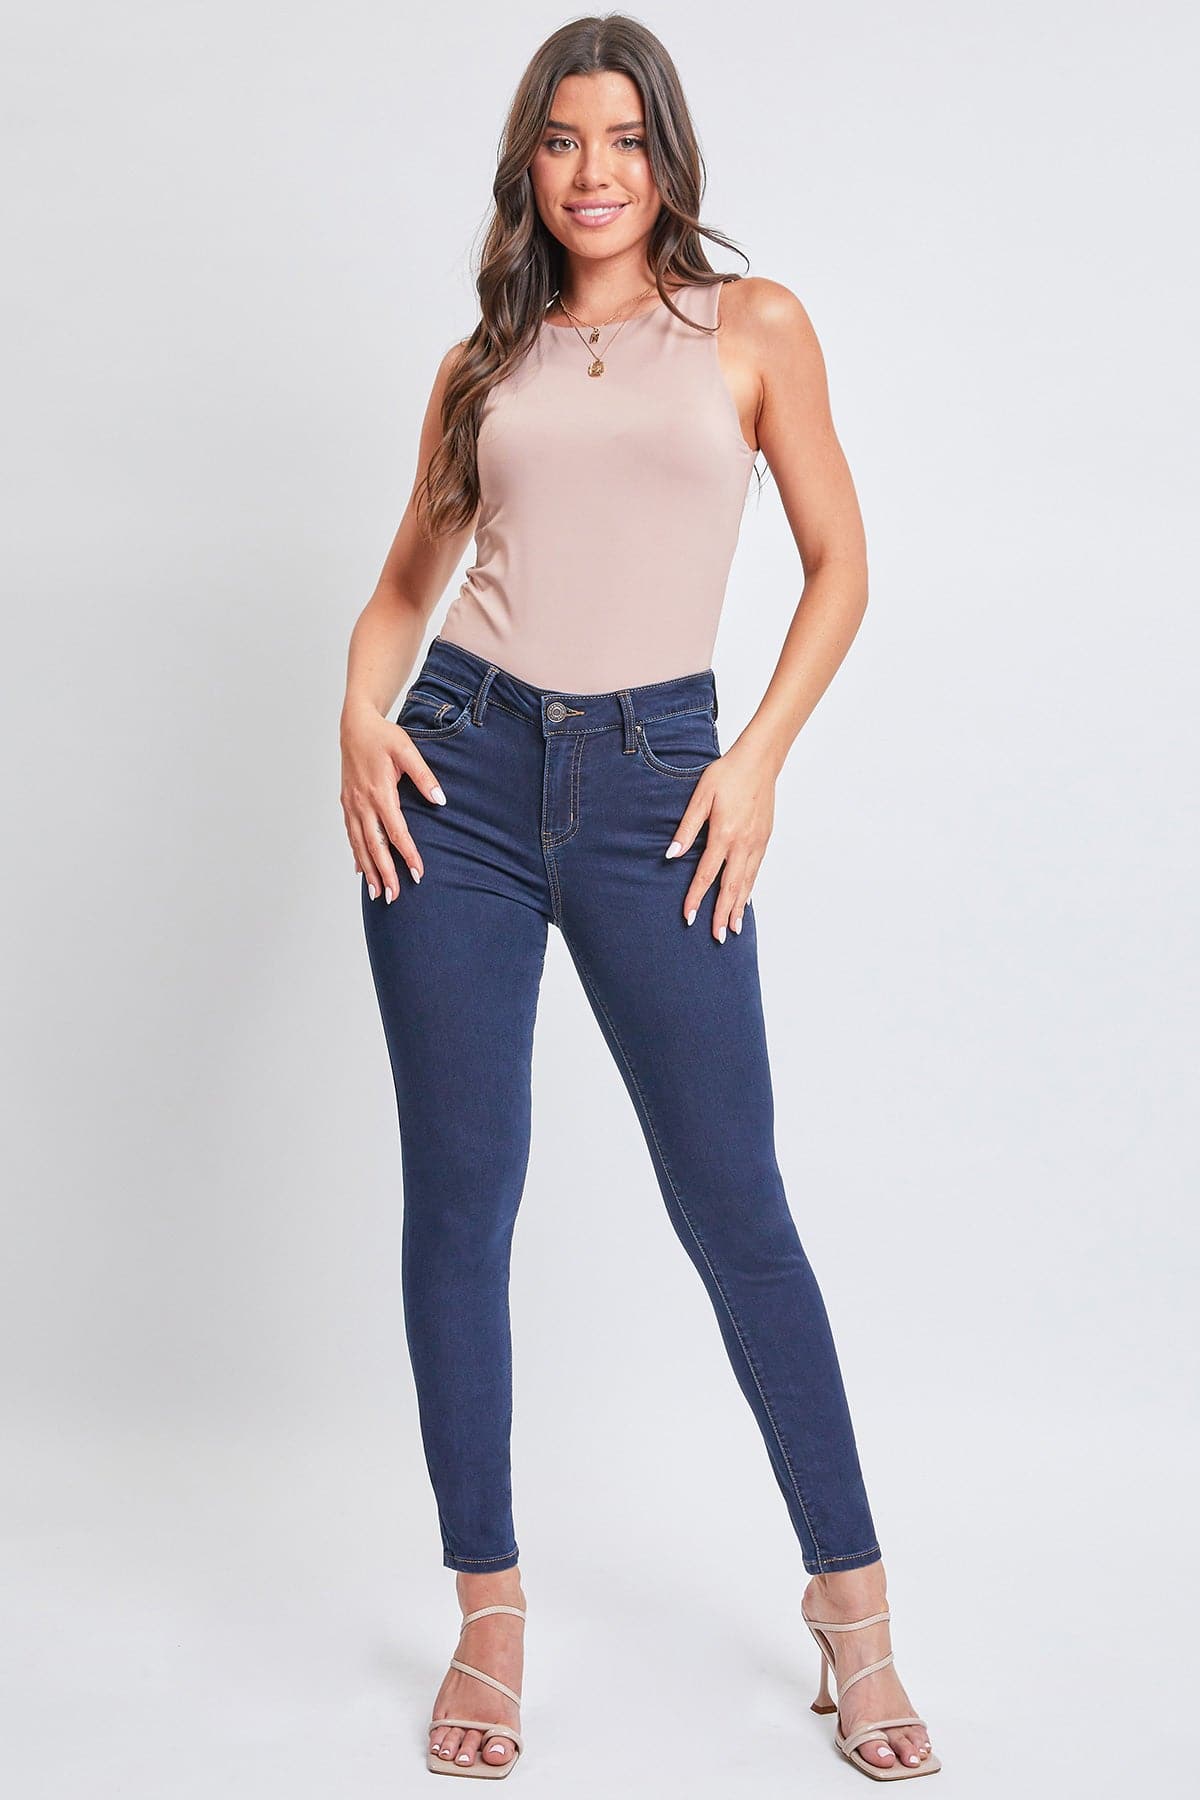 Women's Essential HyperDenim Super Stretchy Jeans from YMI – YMI JEANS